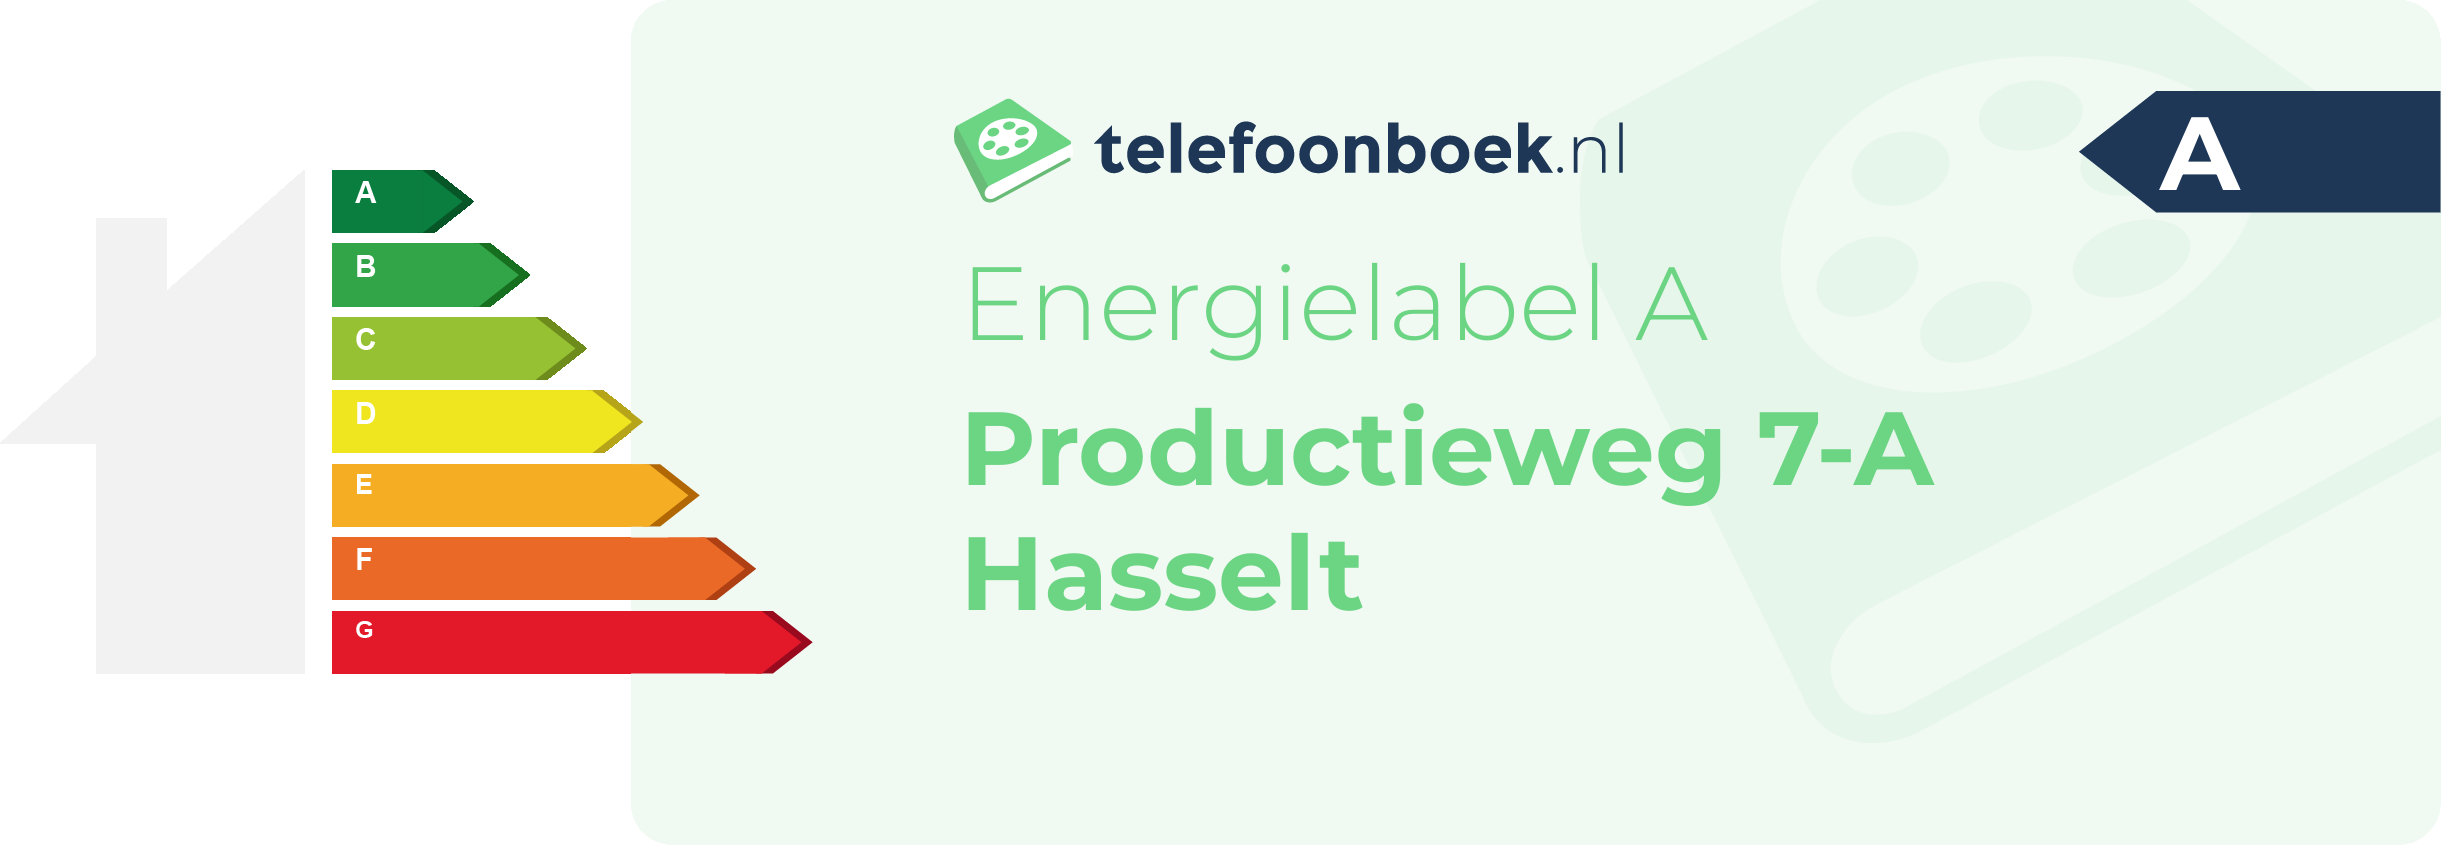 Energielabel Productieweg 7-A Hasselt